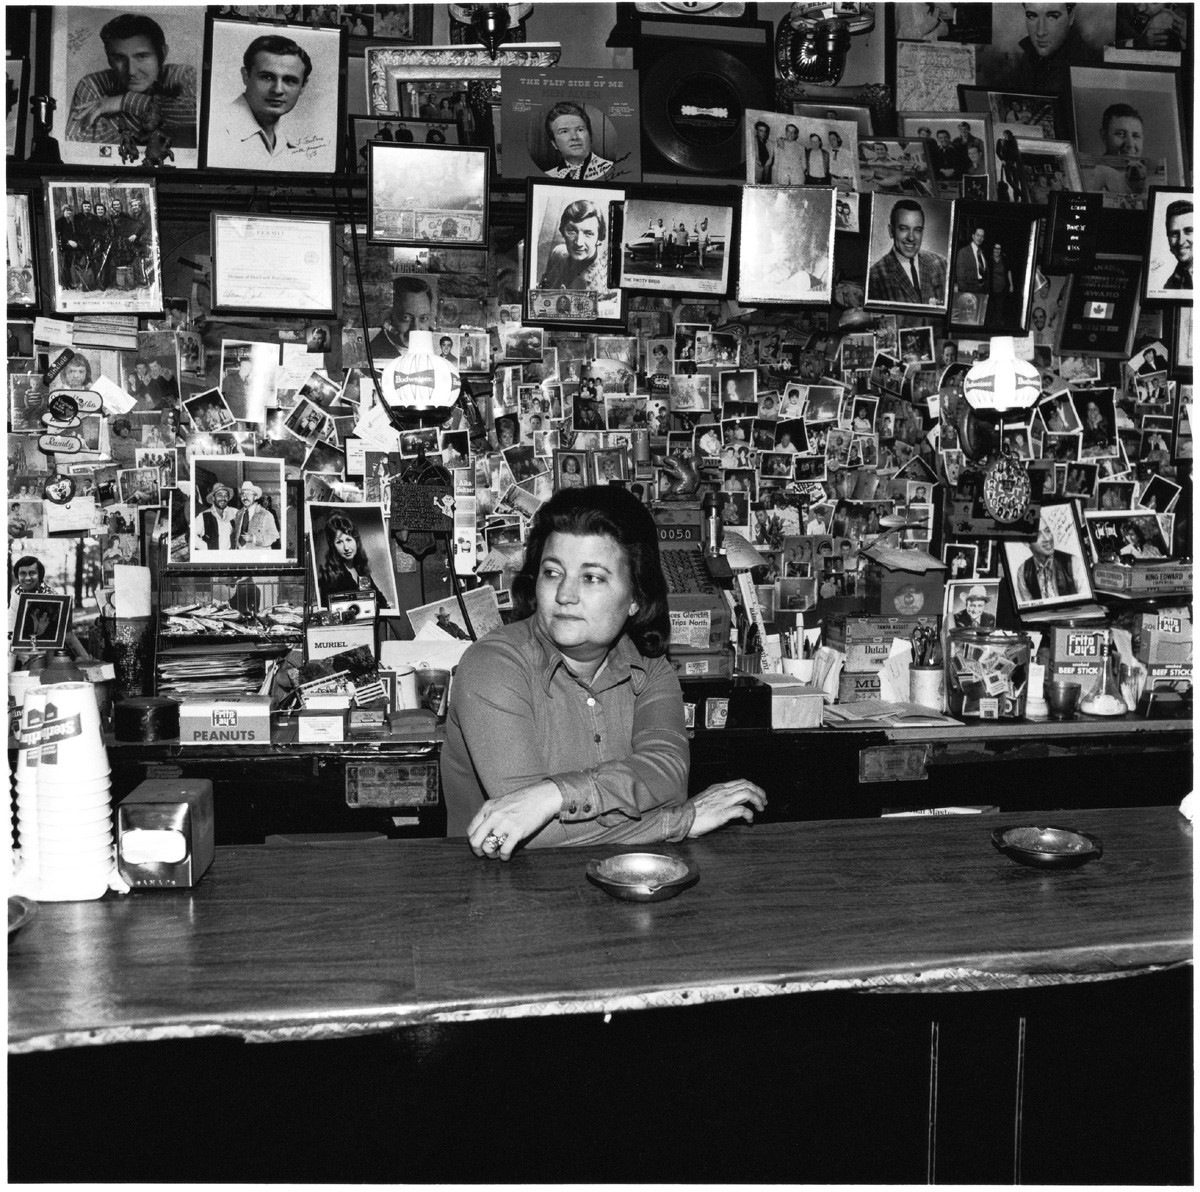 Wanda Behind the Bar. Tootsie's Orchid Lounge, Nashville, TN, 1974